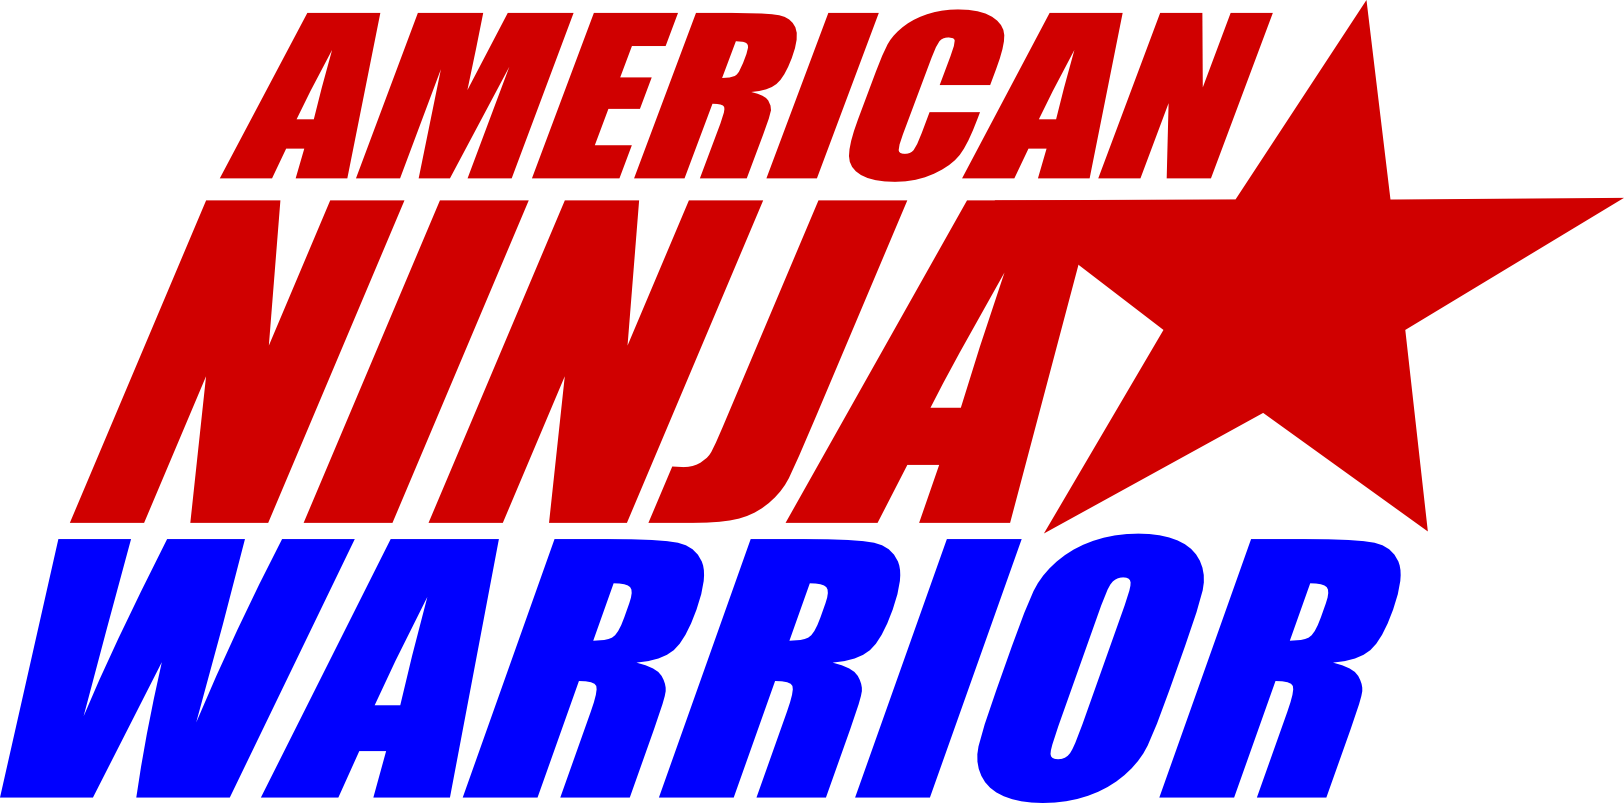 American Ninja Warrior Wallpapers Top Free American Ninja Warrior Backgrounds Wallpaperaccess - american ninja warrior roblox